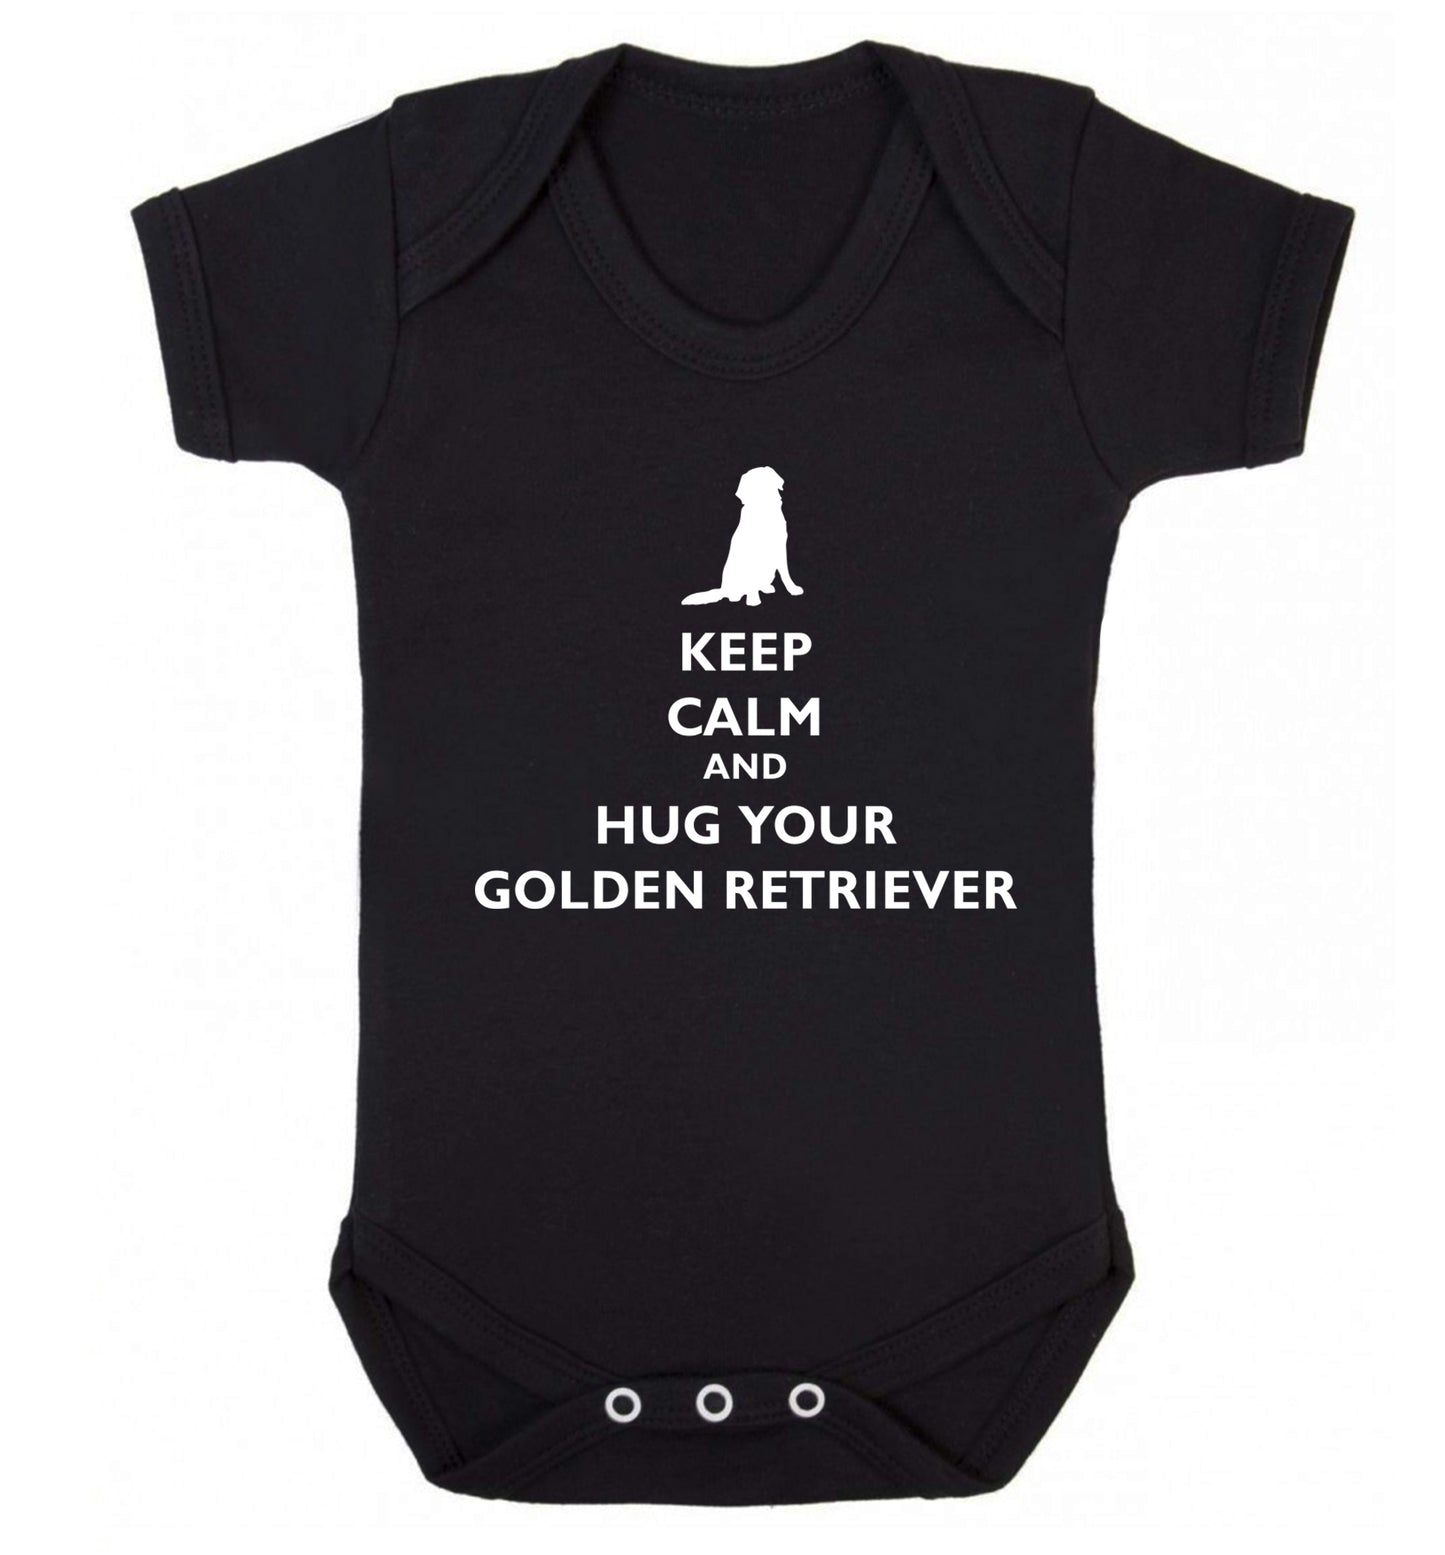 Keep calm and hug your golden retriever Baby Vest black 18-24 months